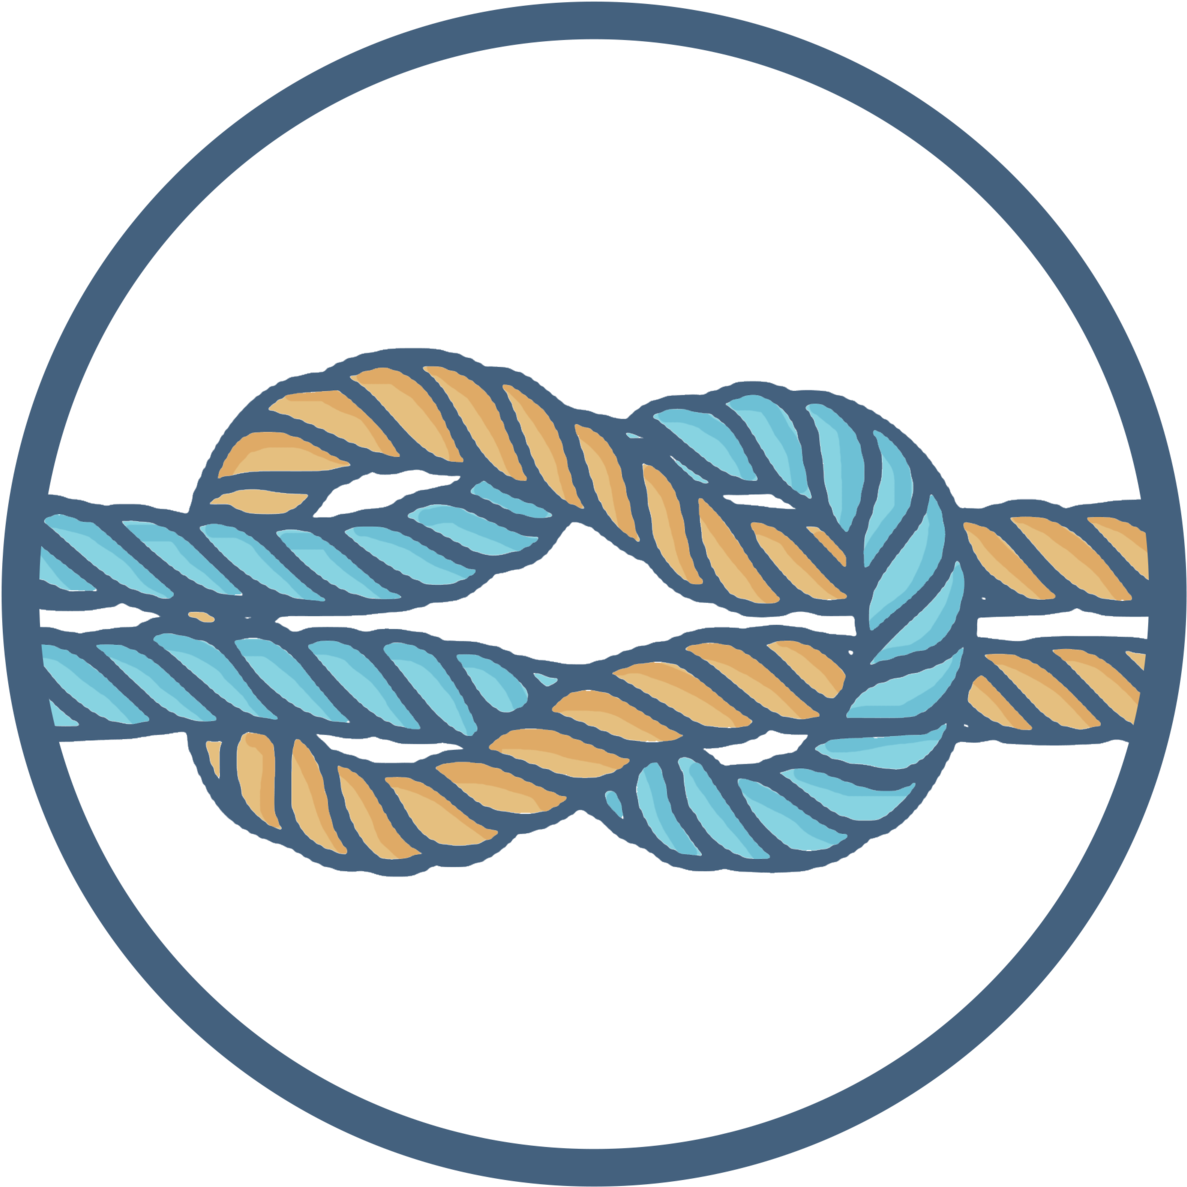 Hercules Clipart Ancient Greek - Symbolic Hercules Knot (1200x1200)